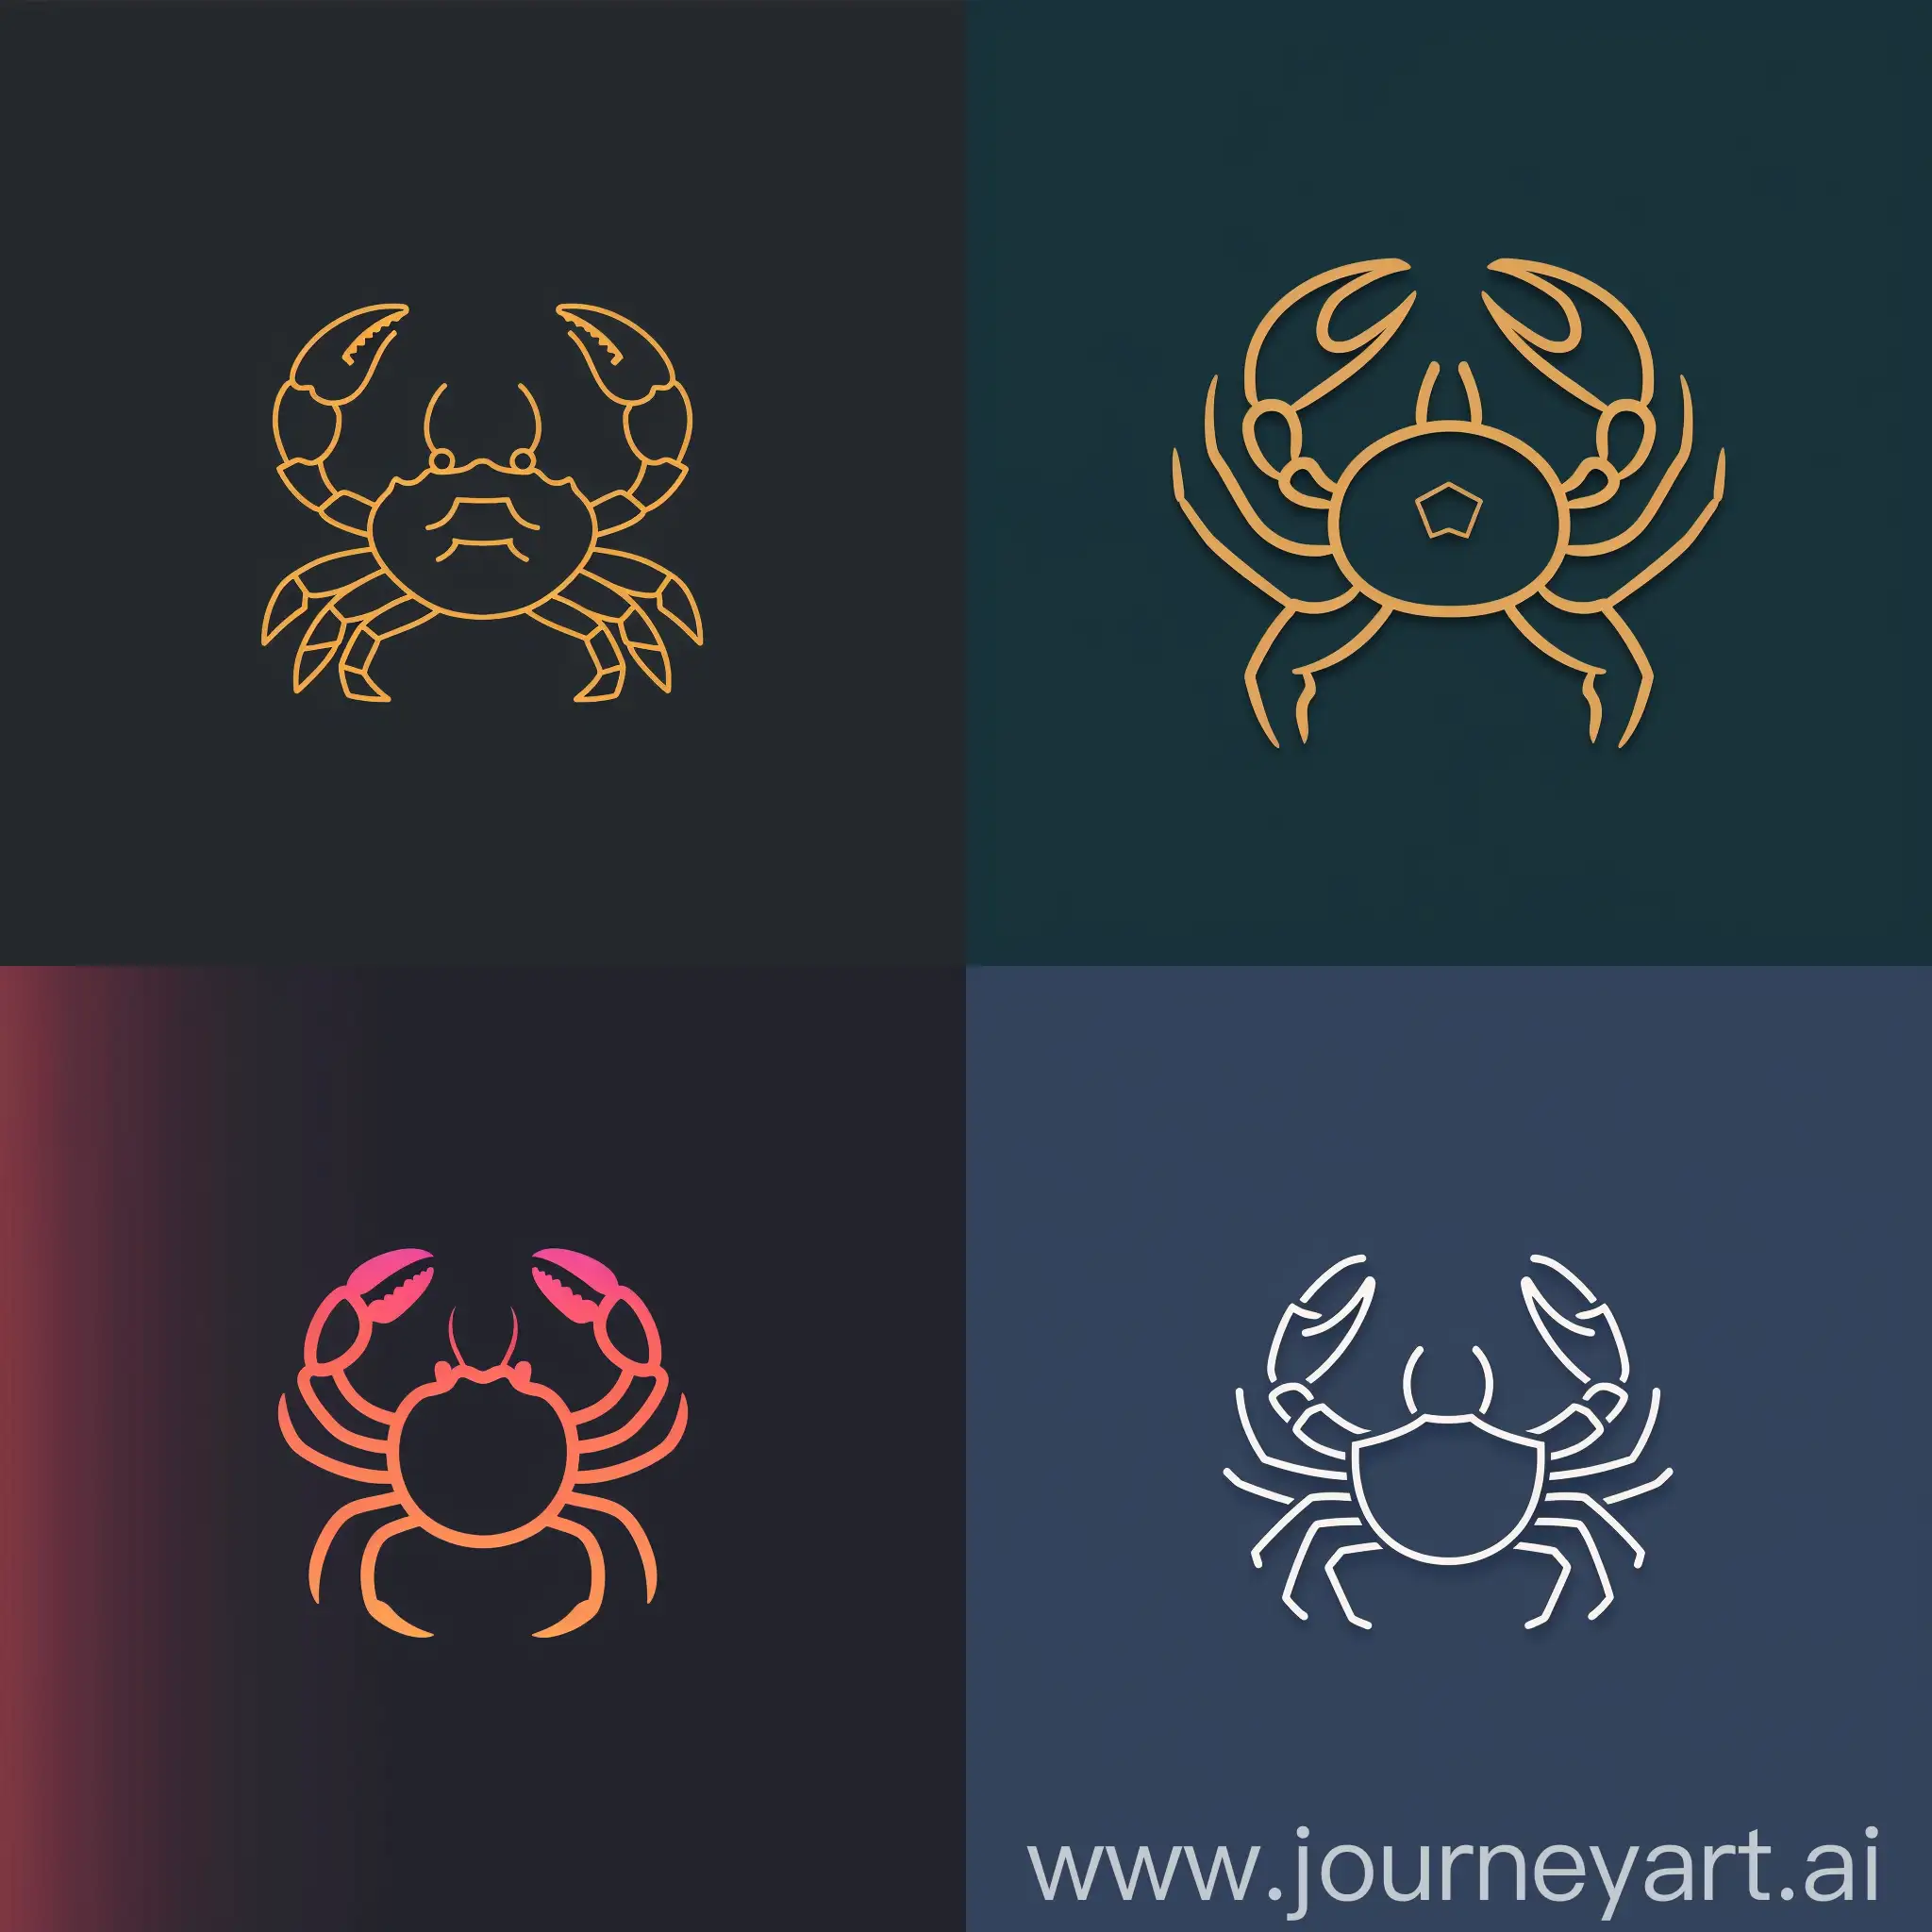 /imagine crab, outline, logo, minimalism, flat style, 3 colors